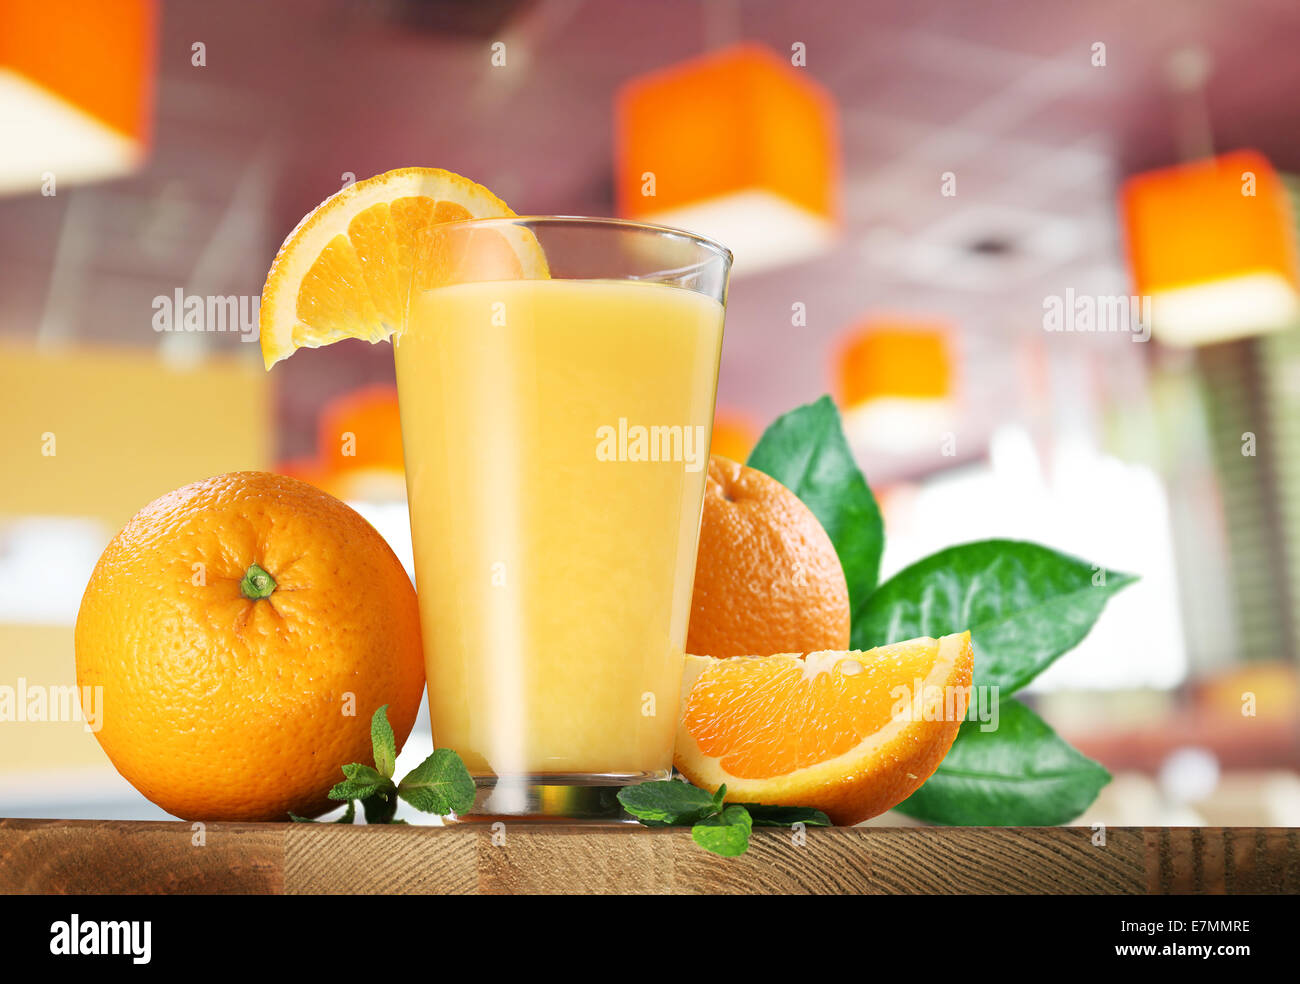 Orange fruits and glass of orange juice on wooden table. Stock Photo